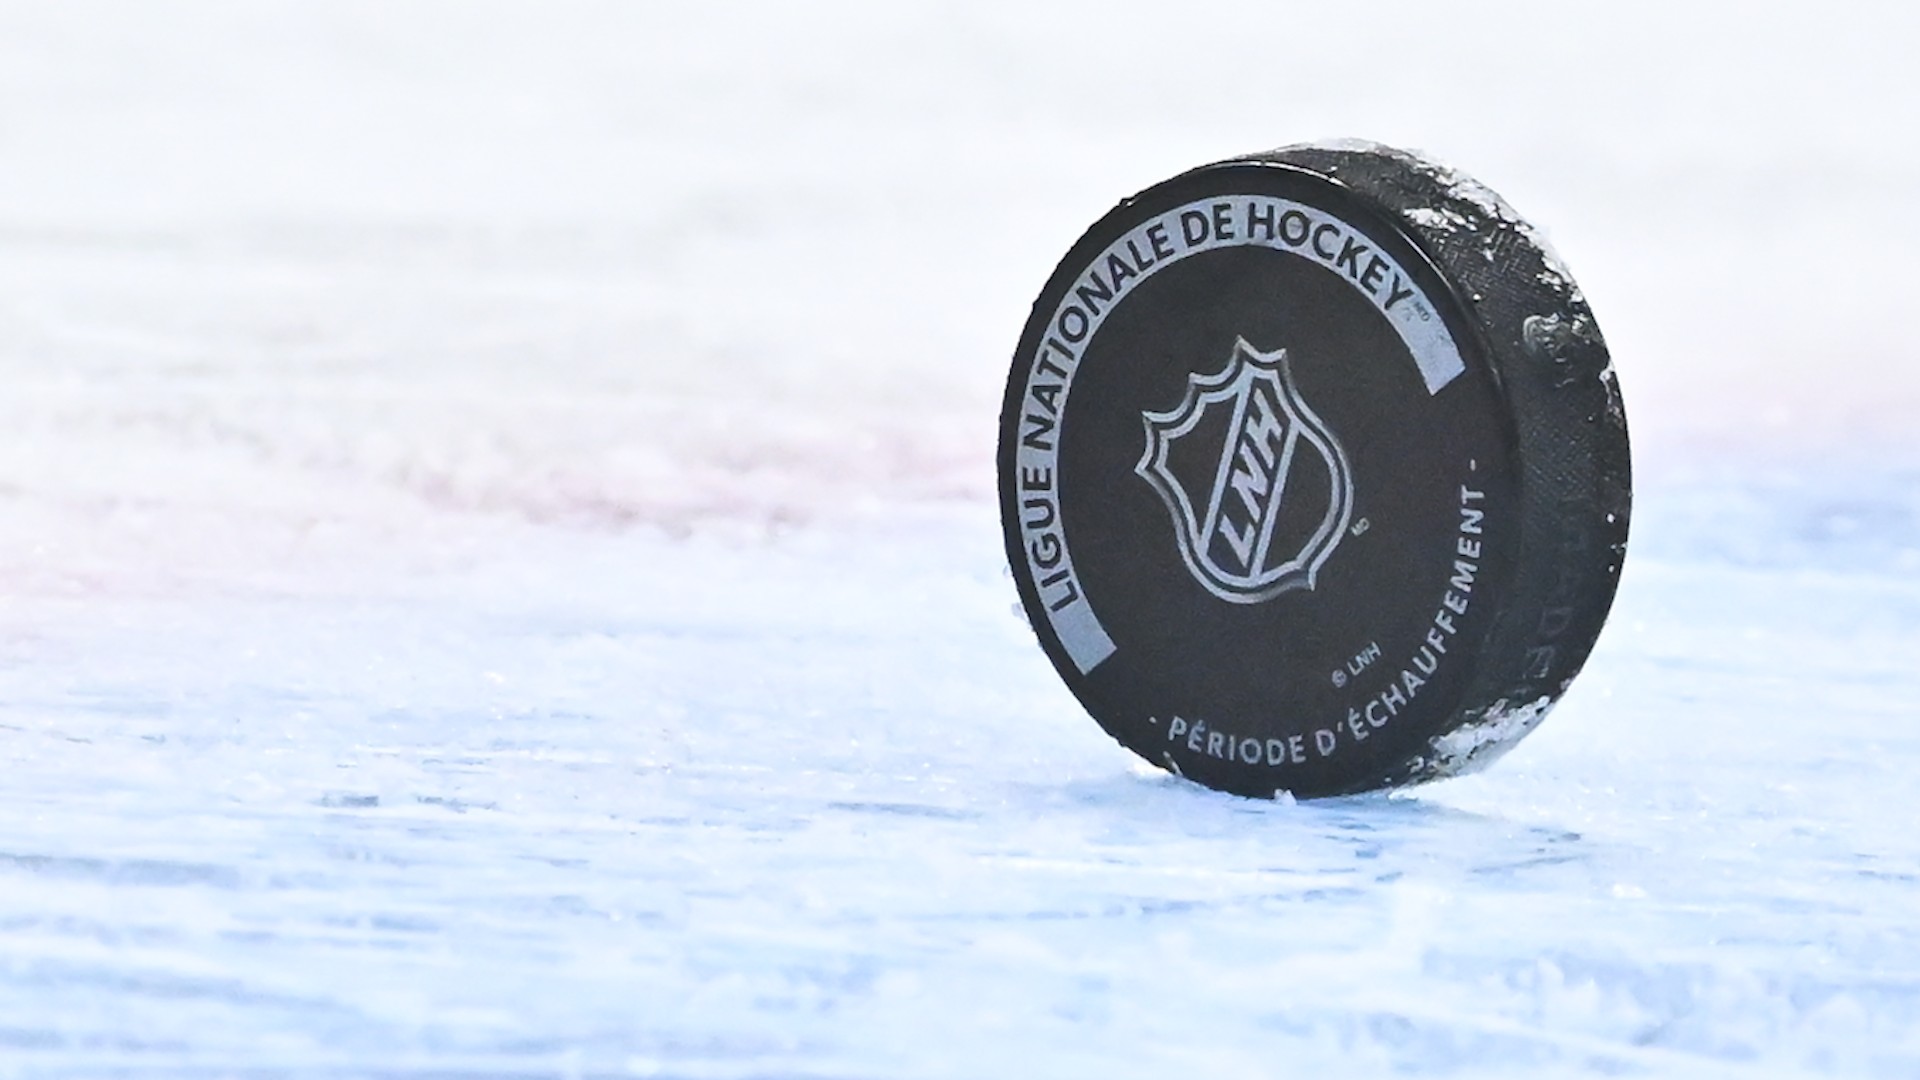 Key dates for the 2023-24 NHL season – NBC Boston